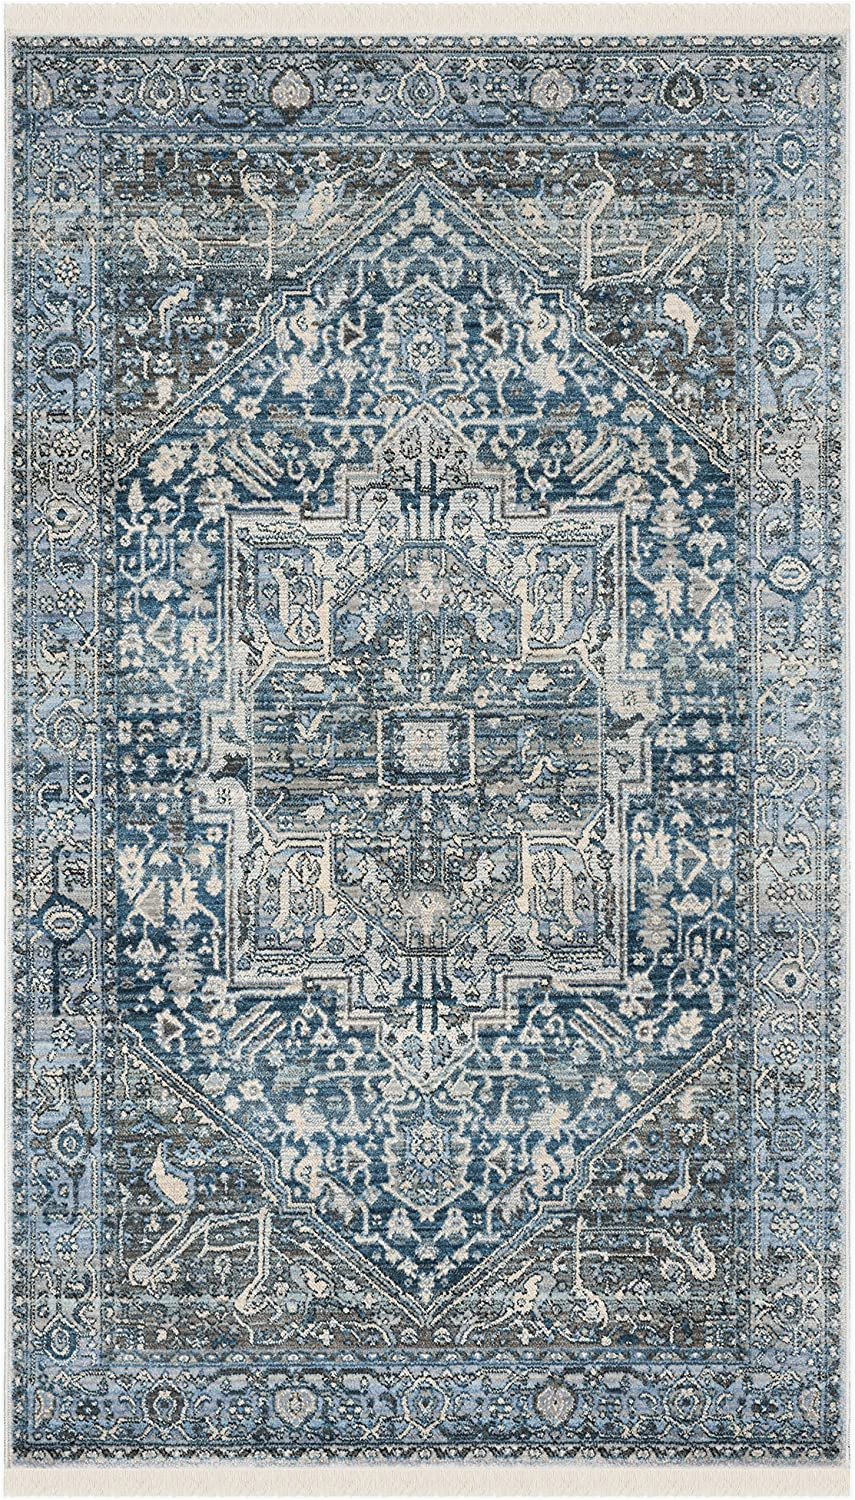 Safavieh Vintage Persian Rug Grey Blue Safavieh Vintage Persian Collection Charcoal and Blue Polyester area Rug 3 X 5